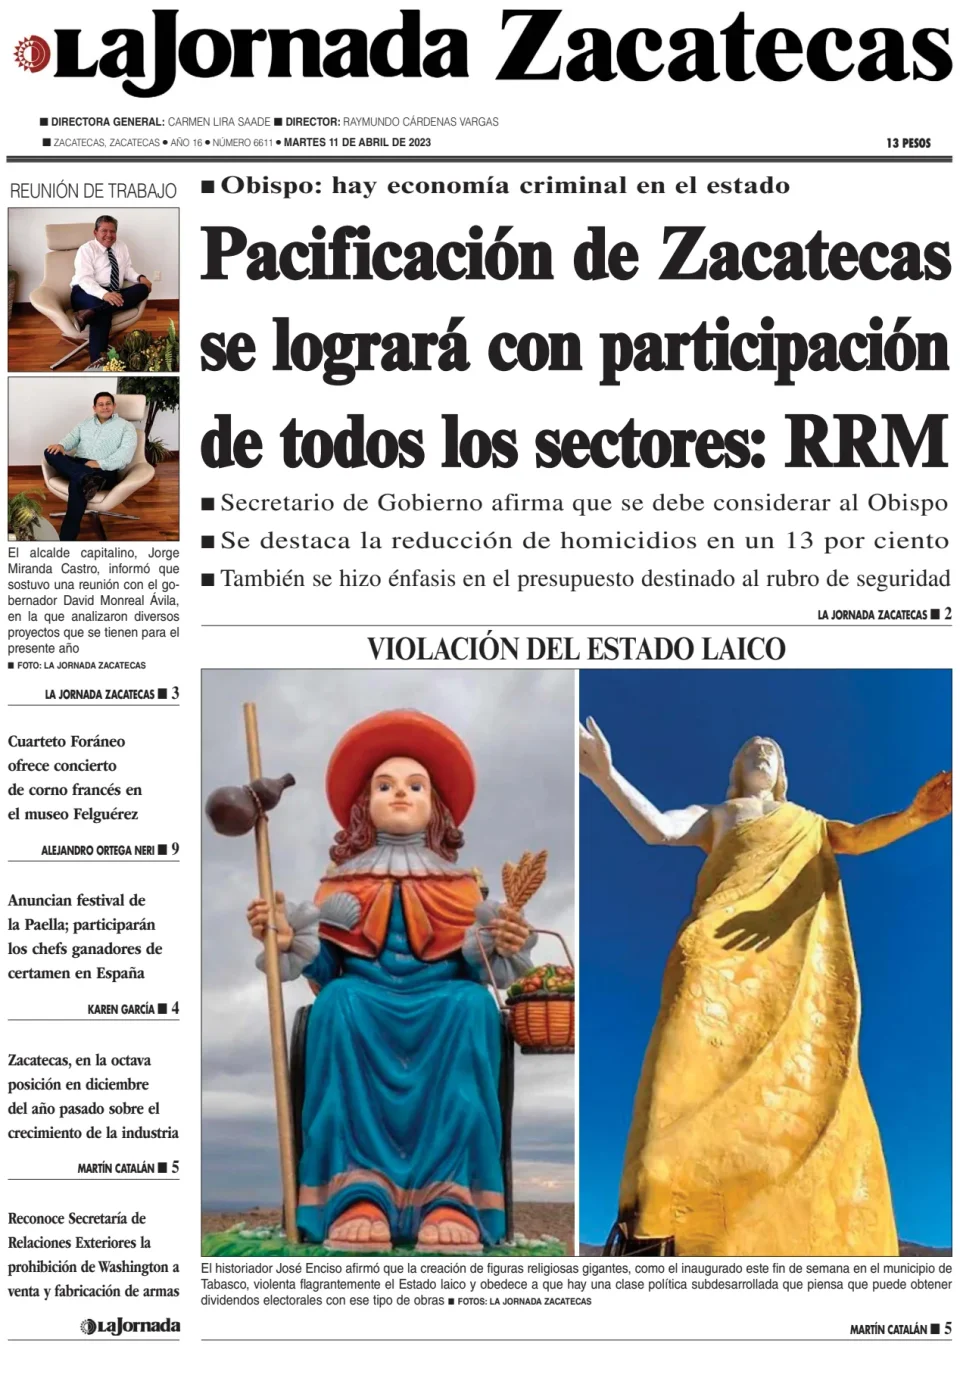 La Jornada Zacatecas